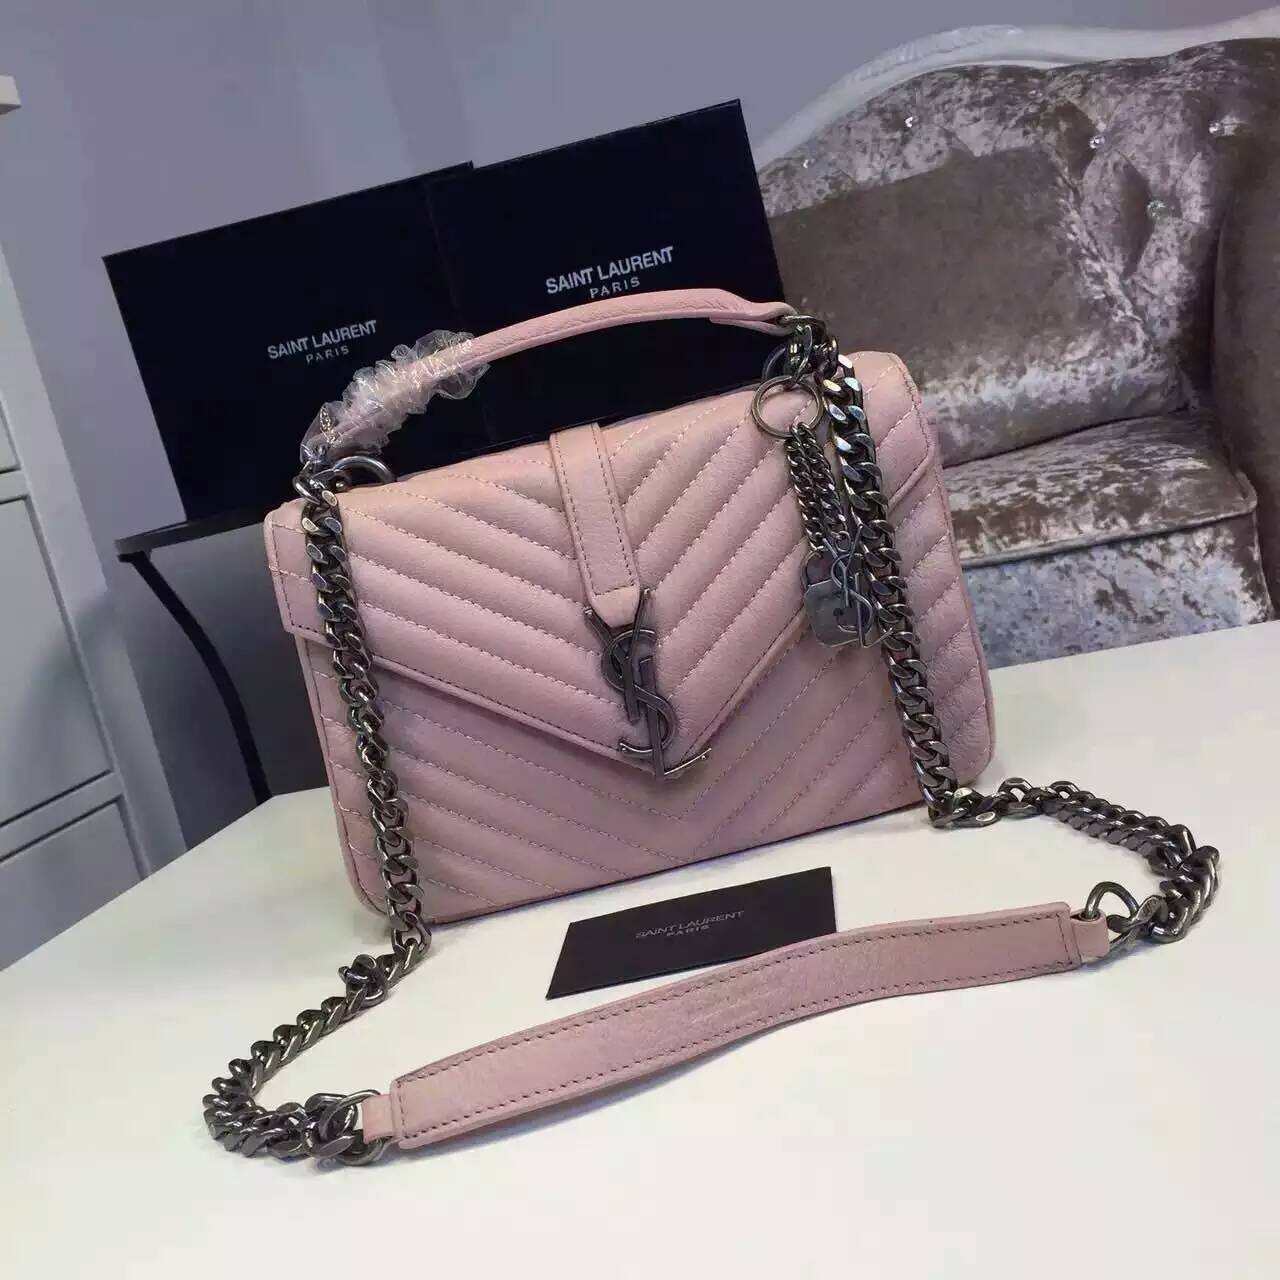 2016 New Saint Laurent Bag Cheap Sale-Saint Laurent Classic Medium COLLEGE MONOGRAM Bag in Pale Pink MATELASSE Leather